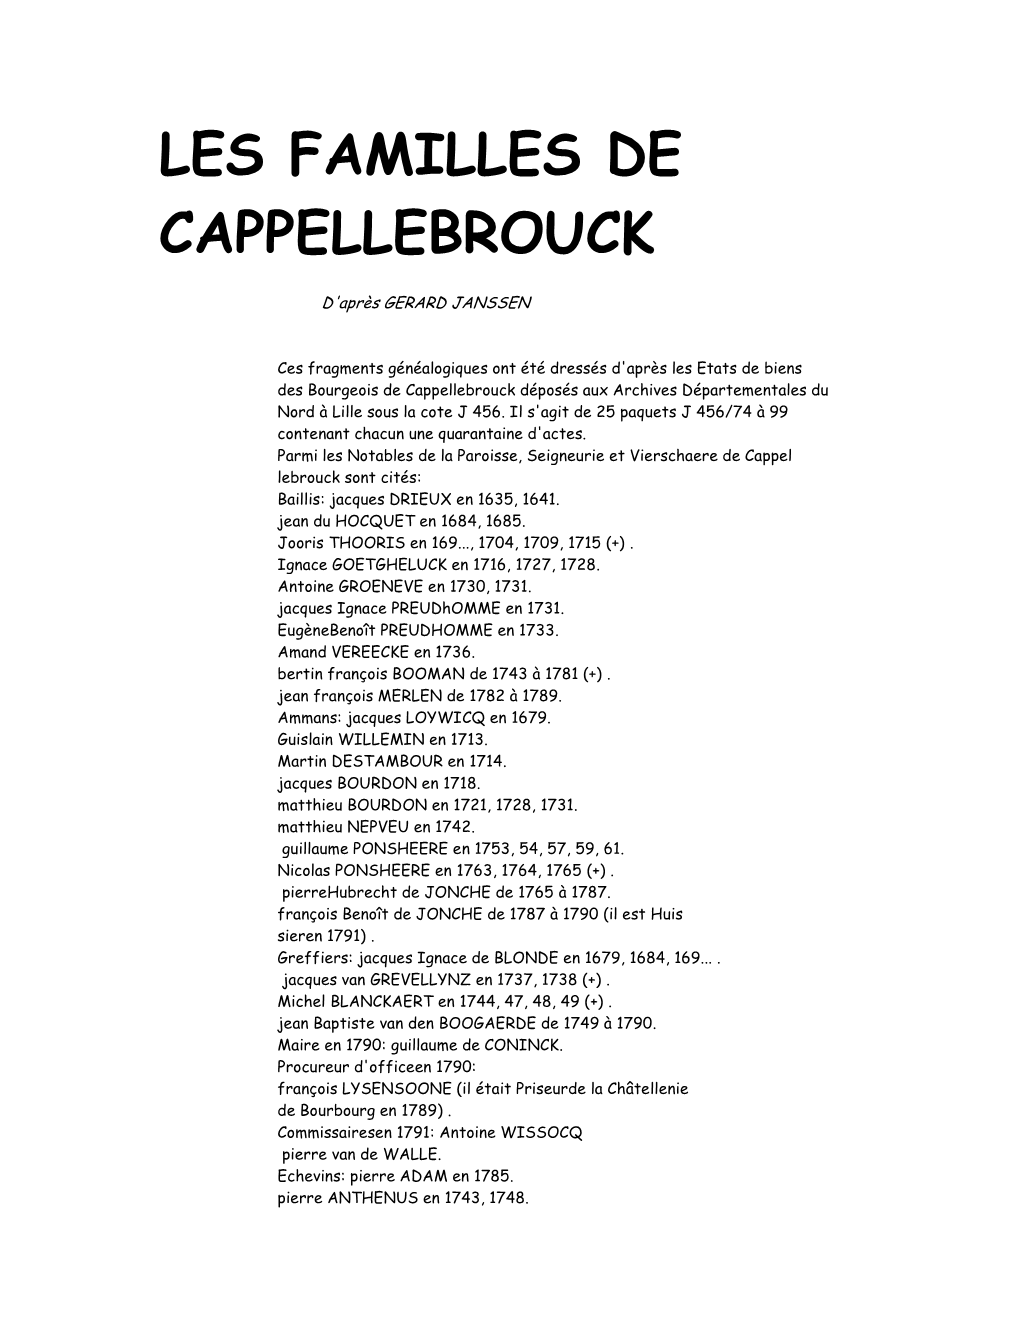 Les Familles De Cappellebrouck